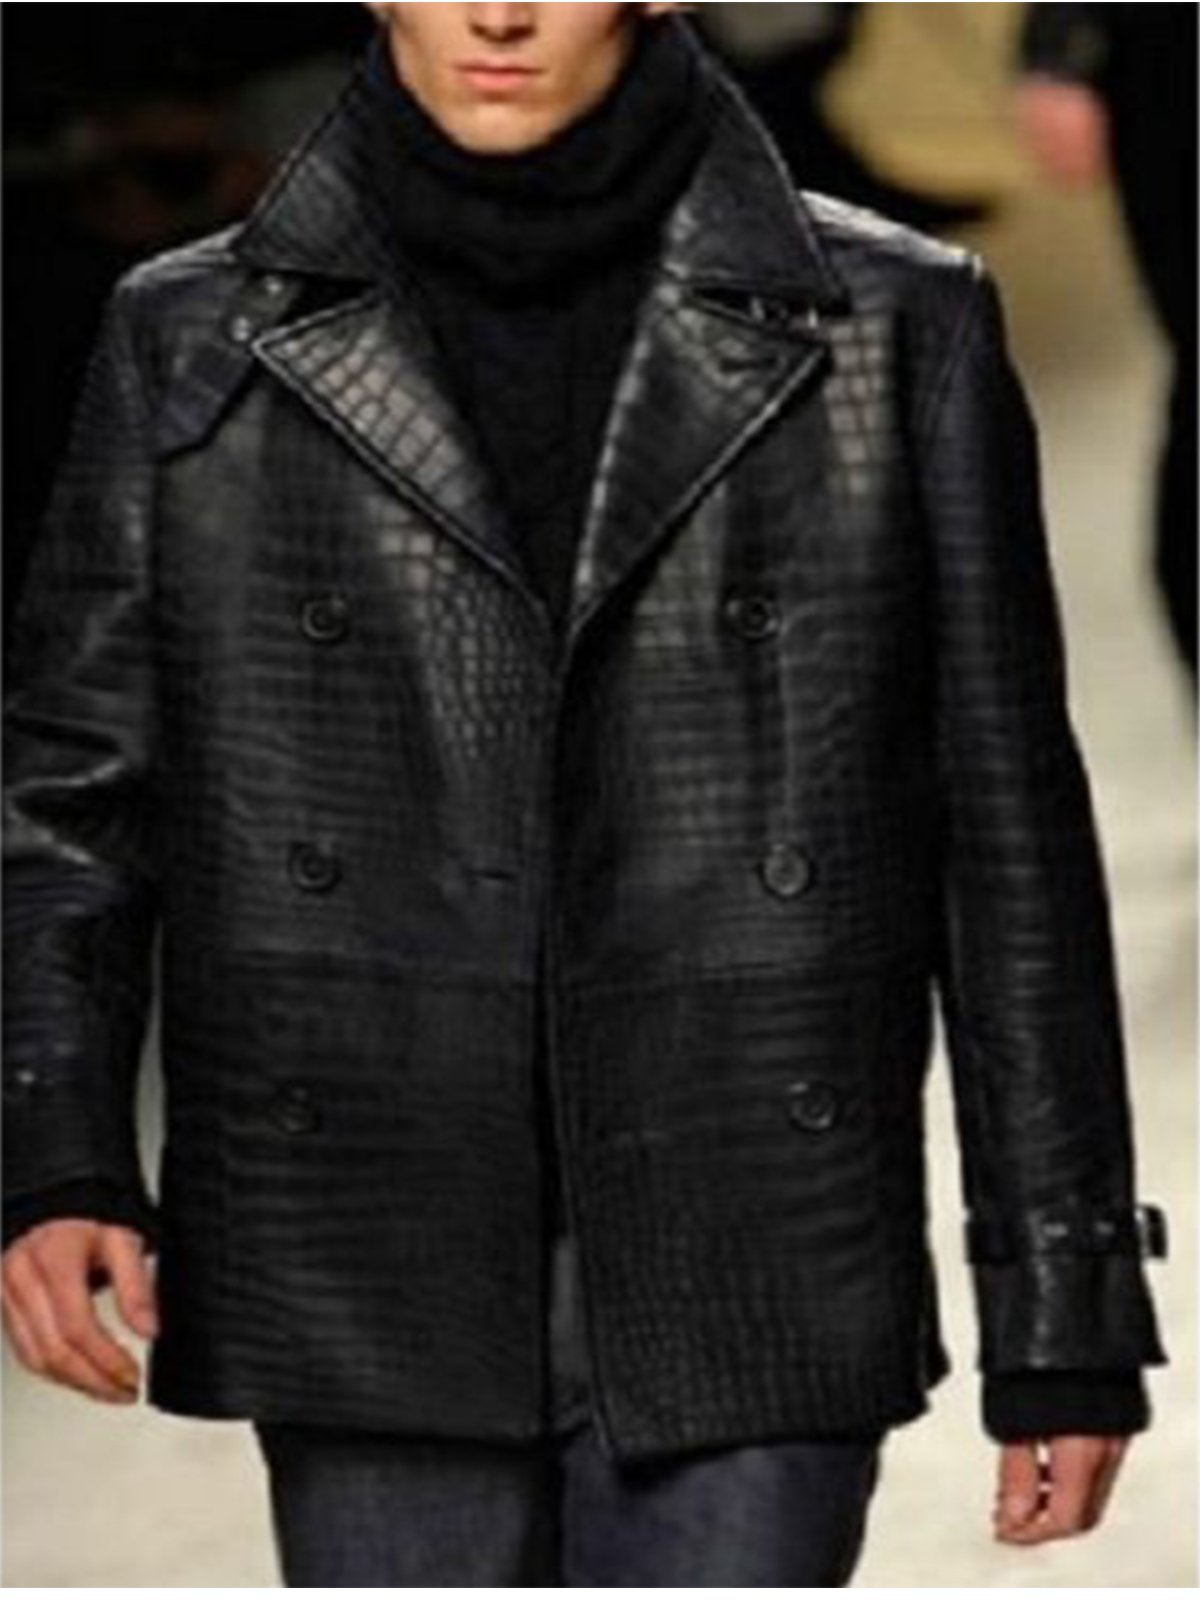 You've gator be kidding! Burberry design a £79,000 crocodile skin coat